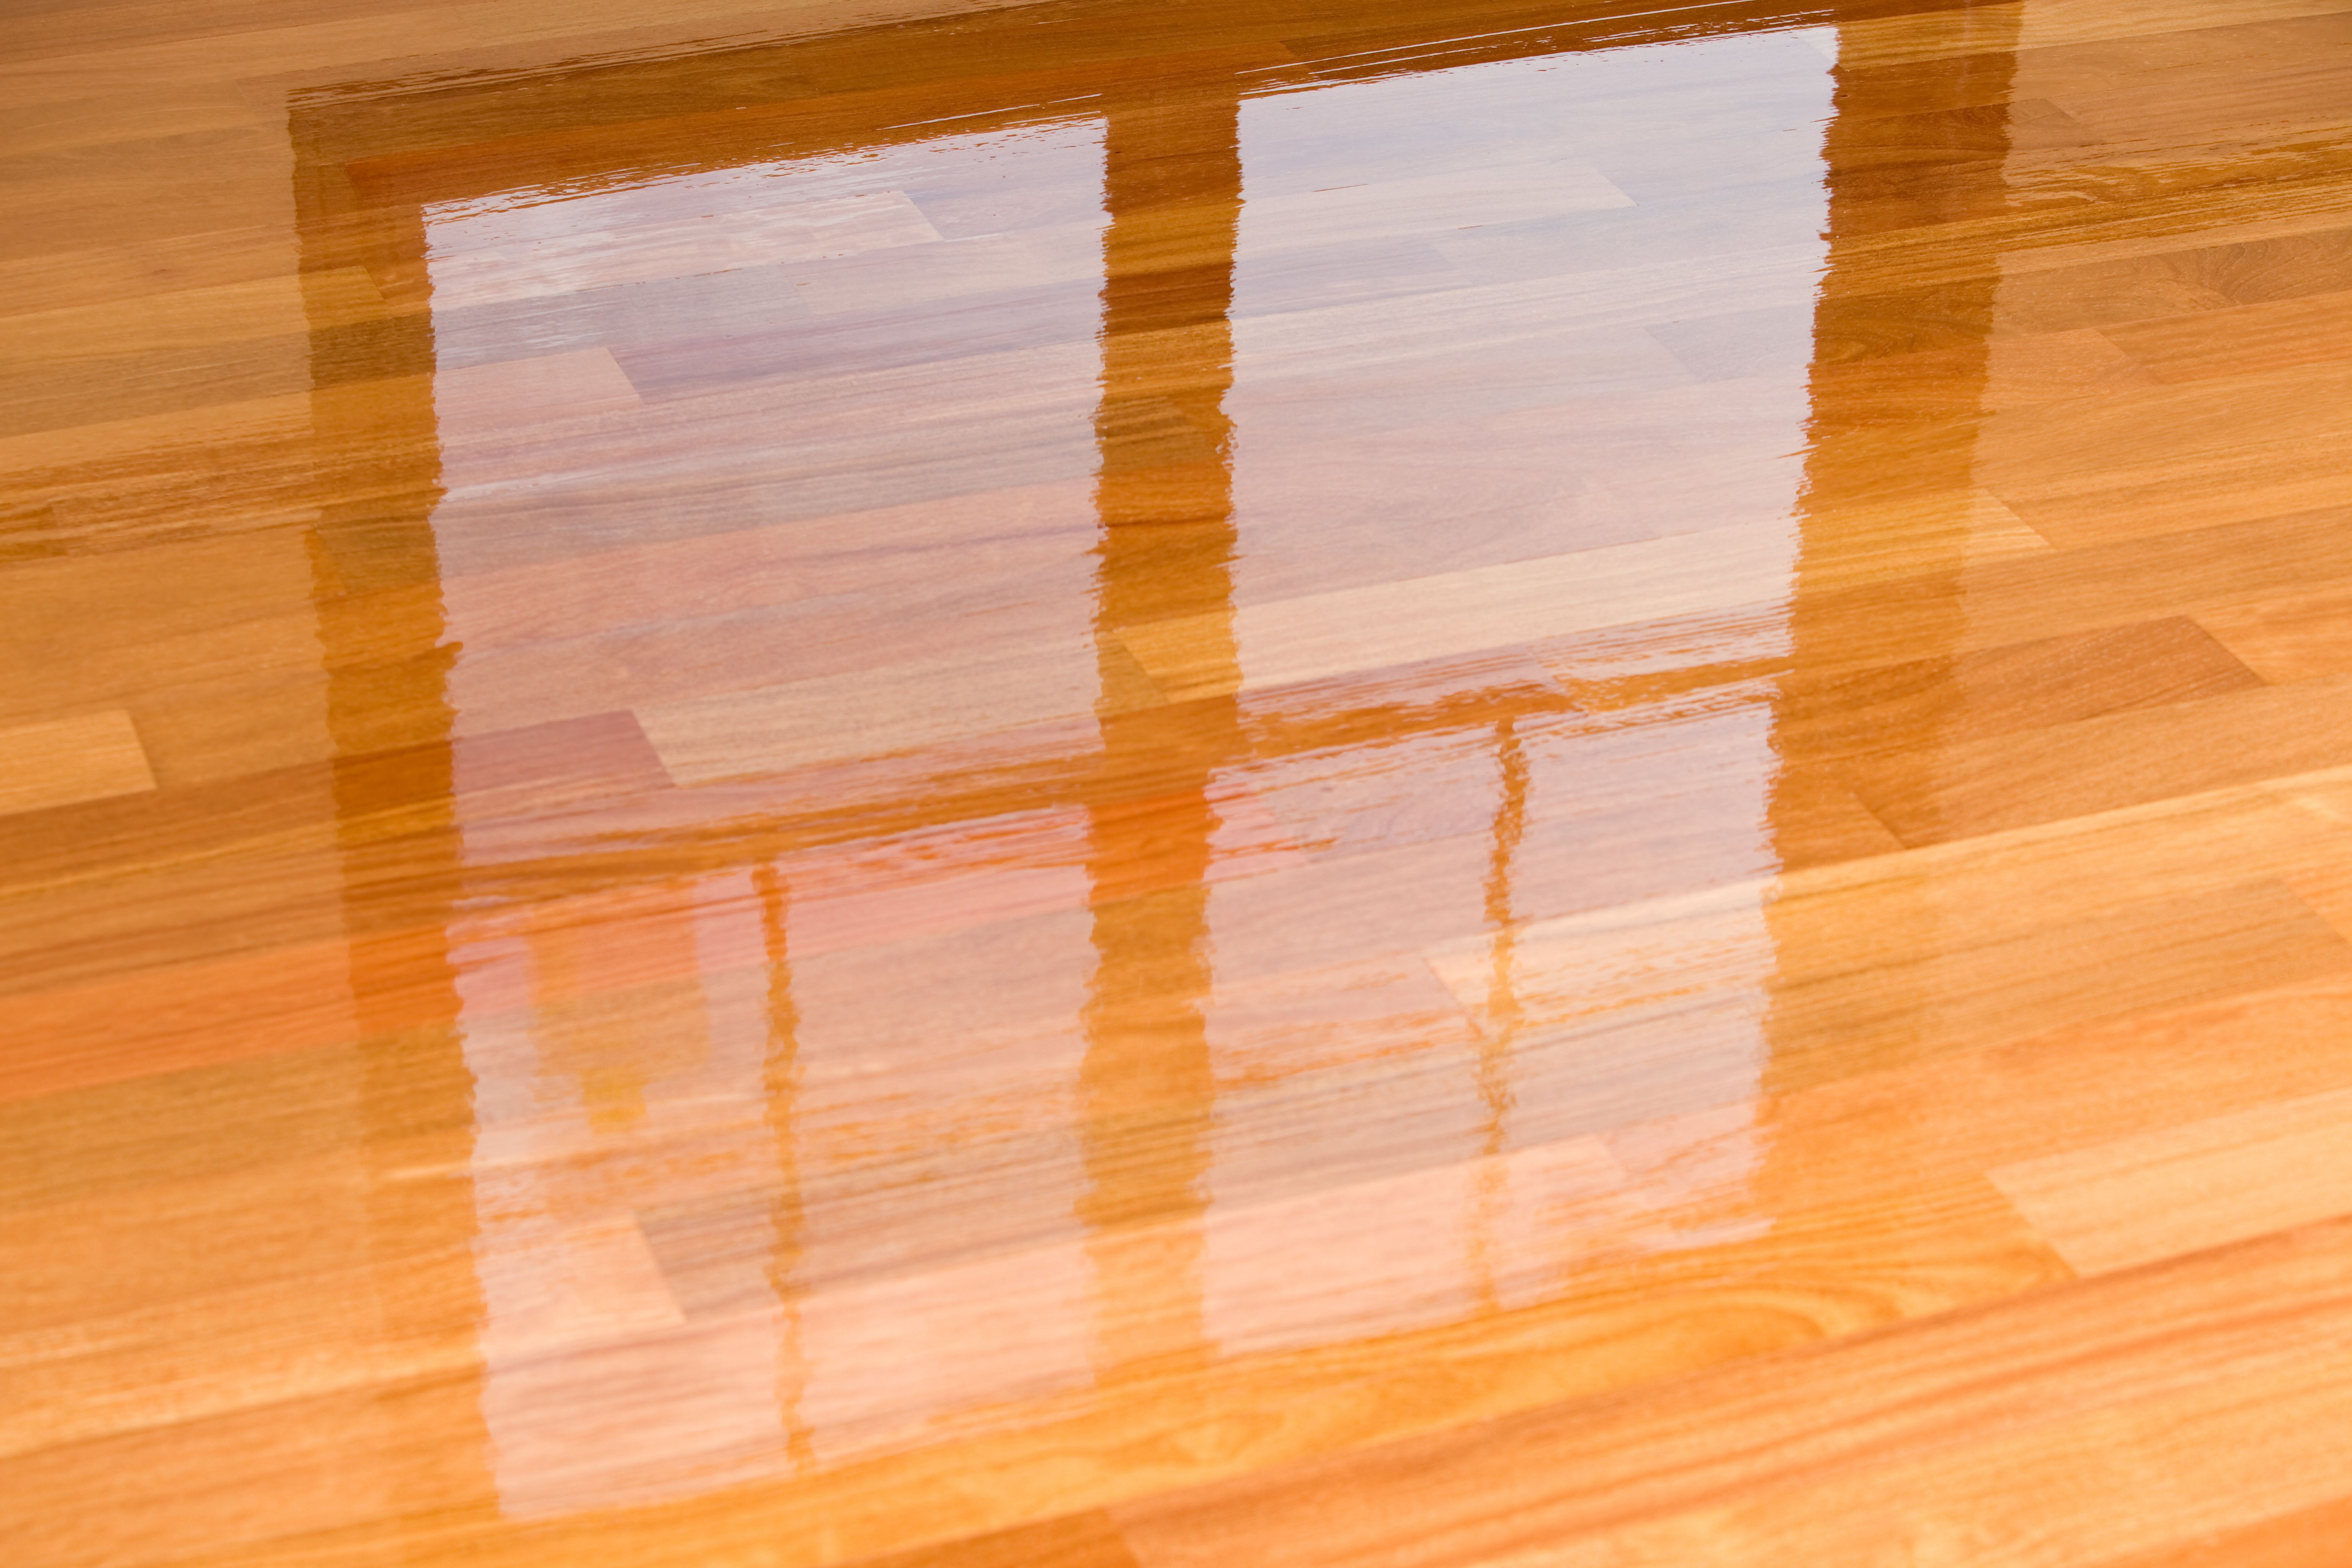 hardwood flooring niagara of guide to laminate flooring water and damage repair inside wet polyurethane on new hardwood floor with window reflection 183846705 582e34da3df78c6f6a403968